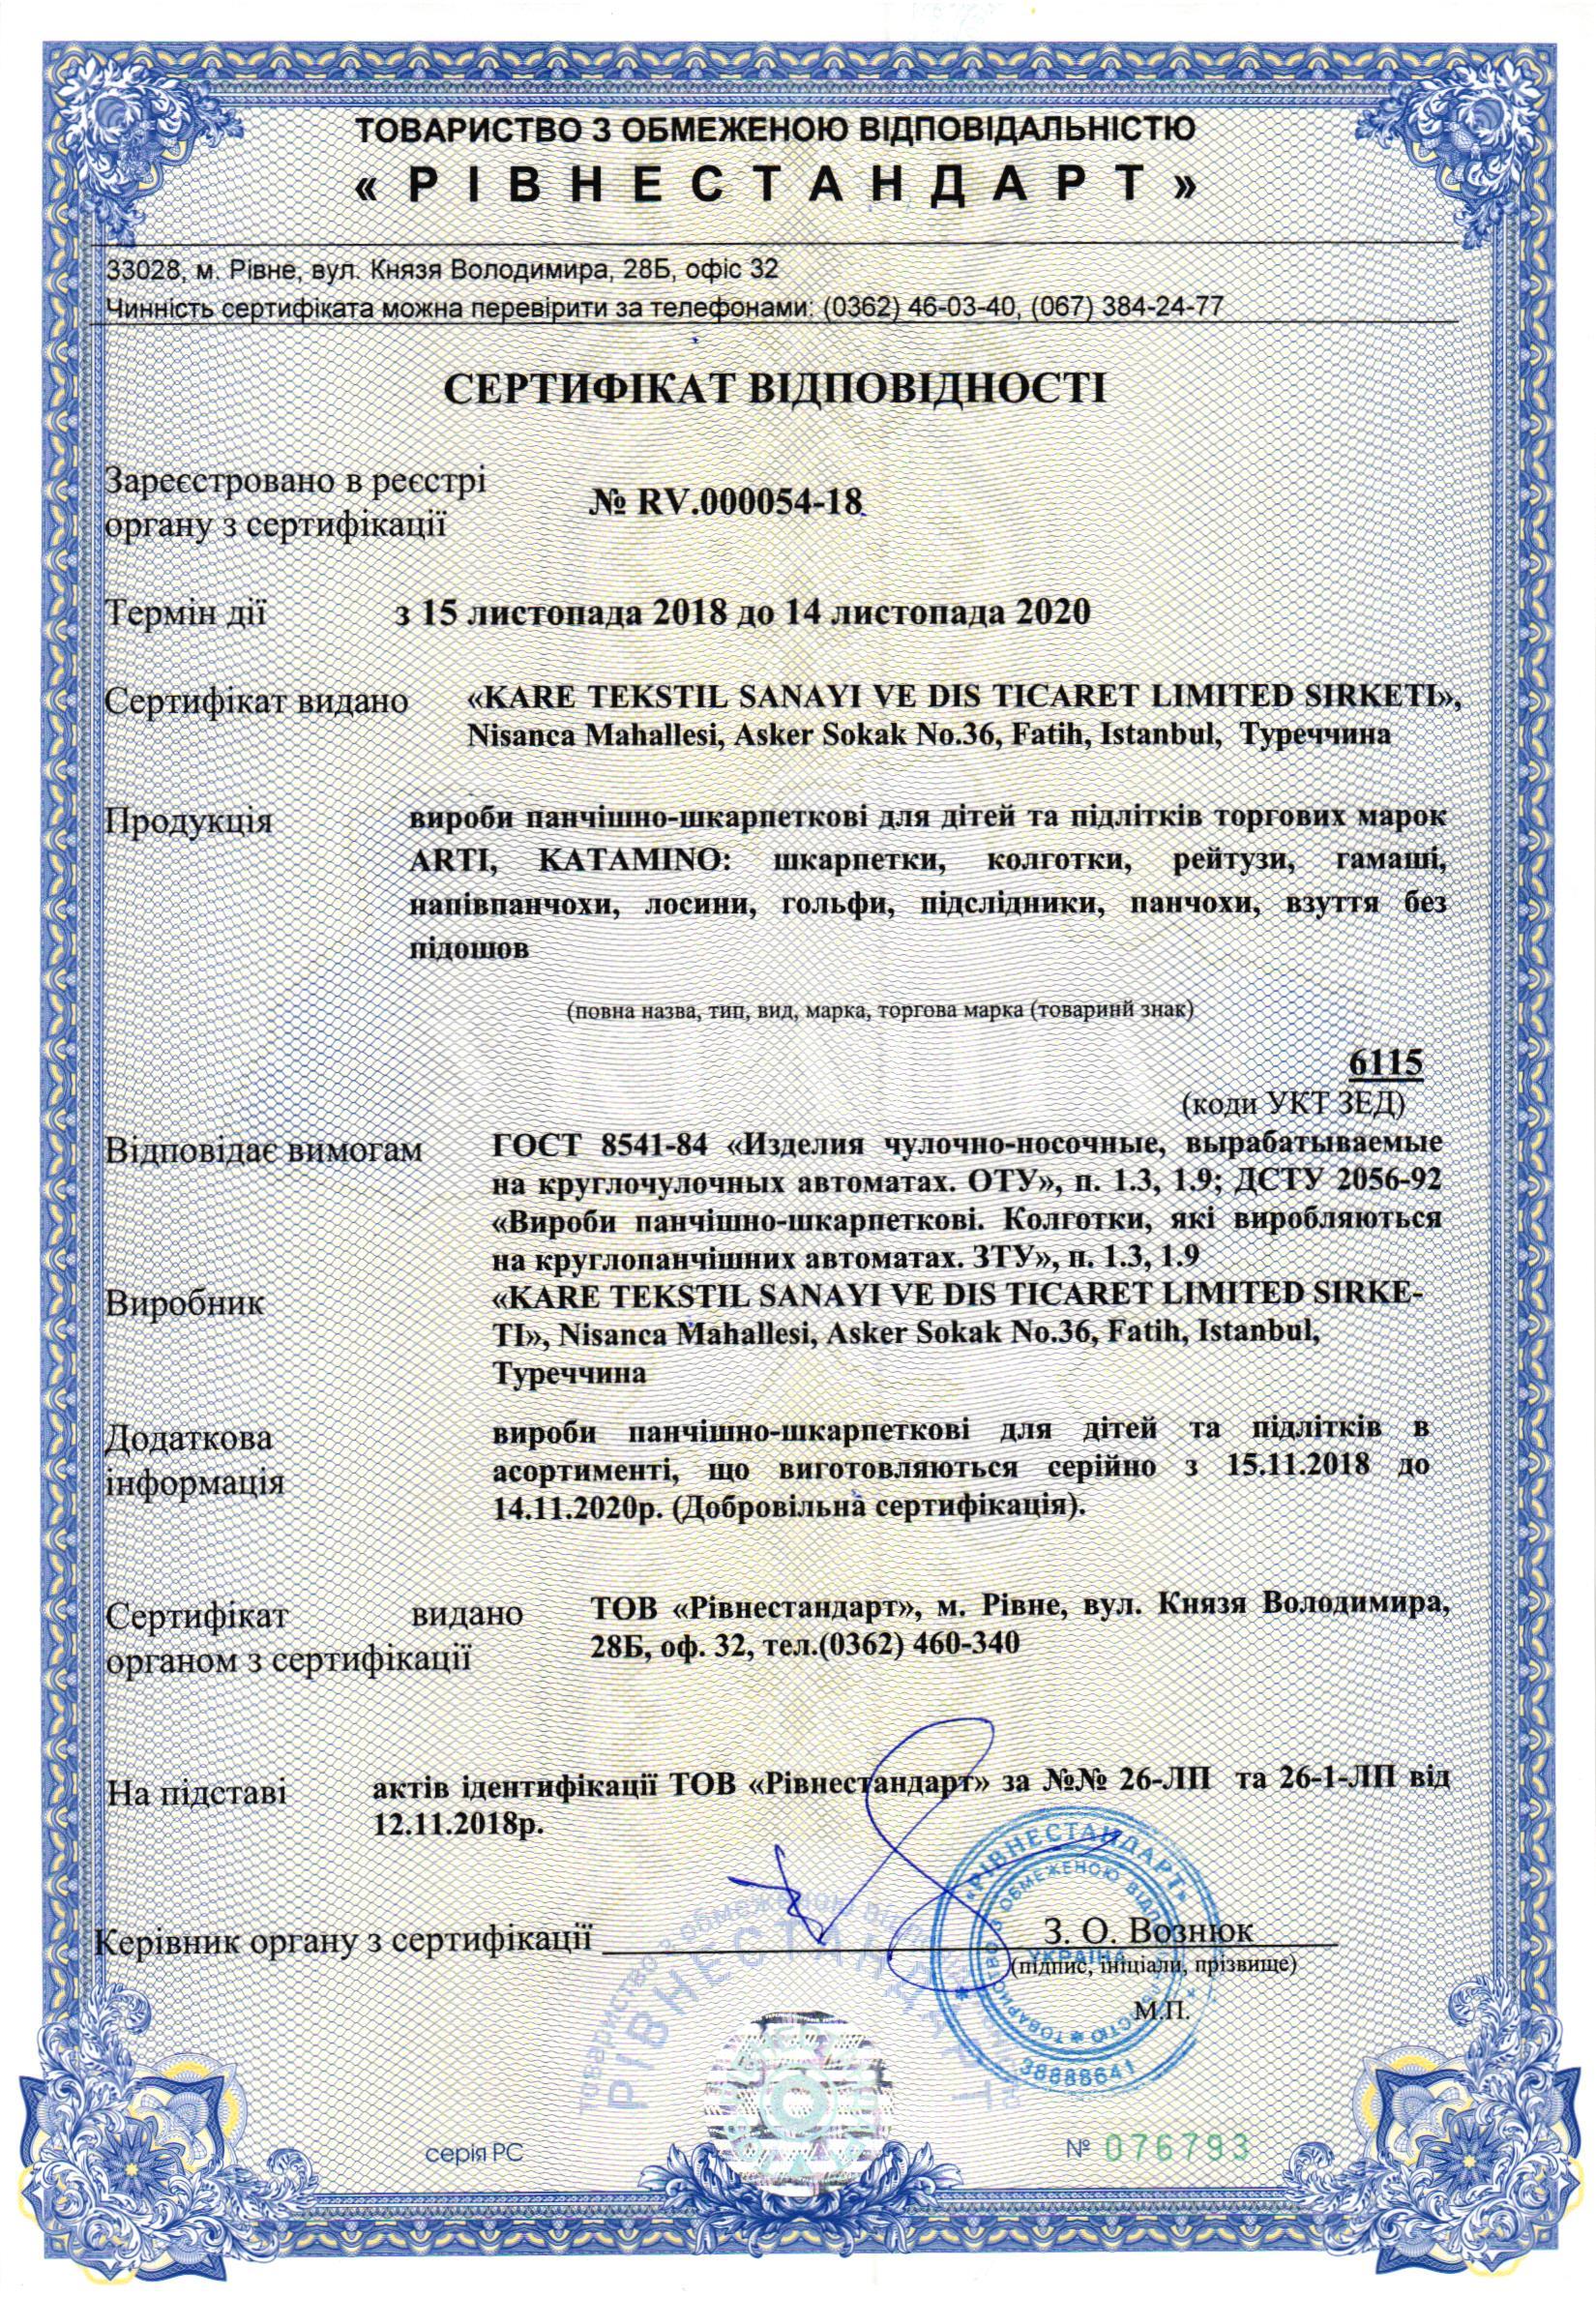 ukrayna-sertifika (3).jpg (1.08 MB)